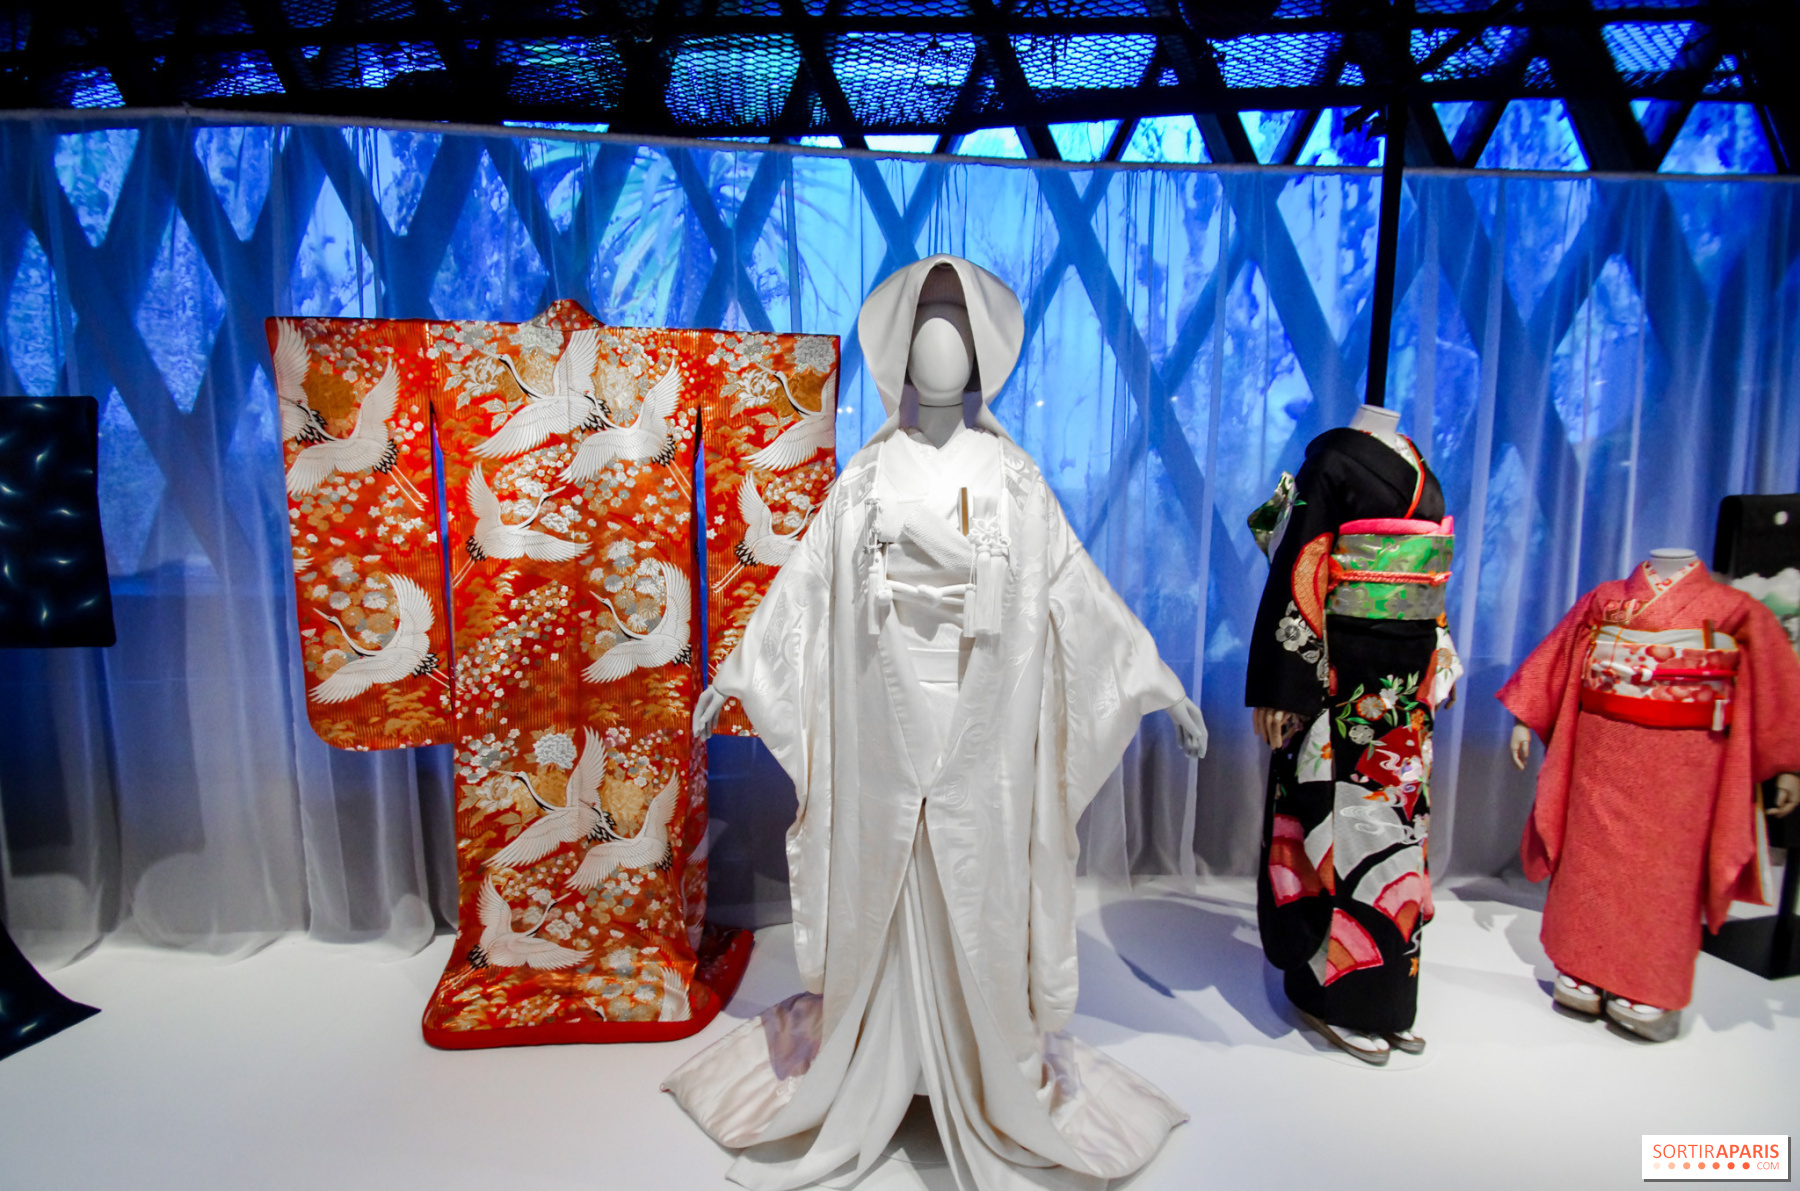 Kimono: the compelling exhibition at Paris Musée du Quai our pictures - Sortiraparis.com